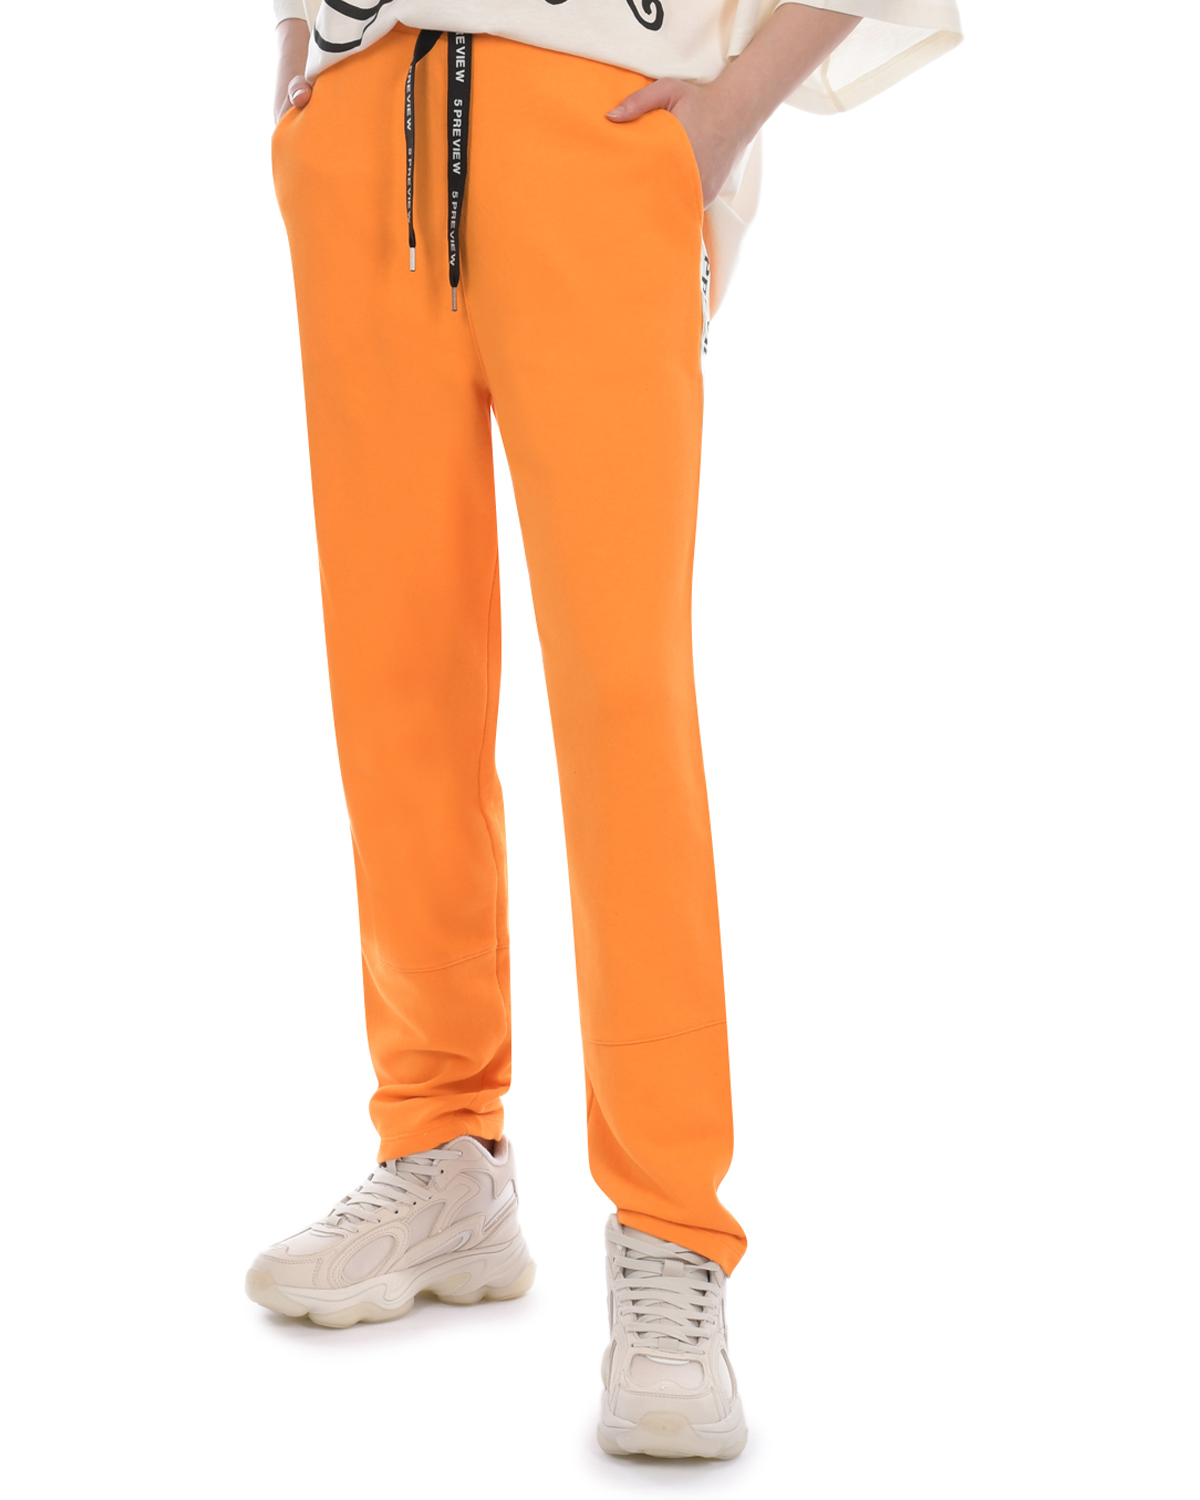 Оранжевые джоггеры с лампасами 5 Preview, размер 40, цвет оранжевый - фото 6